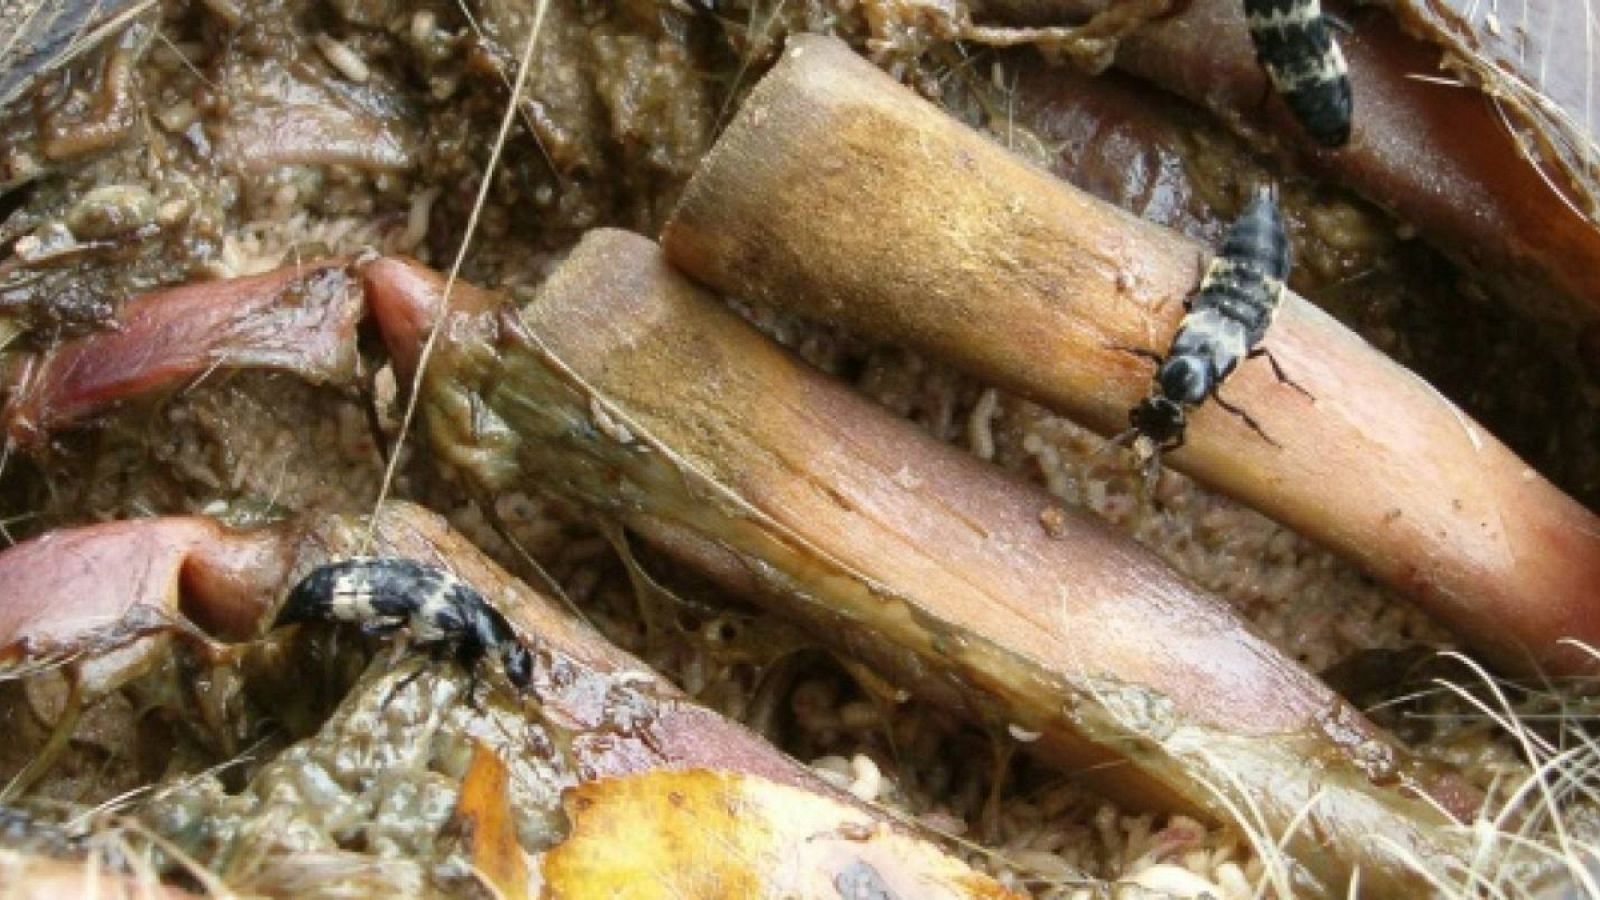 Grupo de escarabajos estafilínidos comiendo larvas de mosca de un cadáver de cerdo en avanzado estado de descomposición